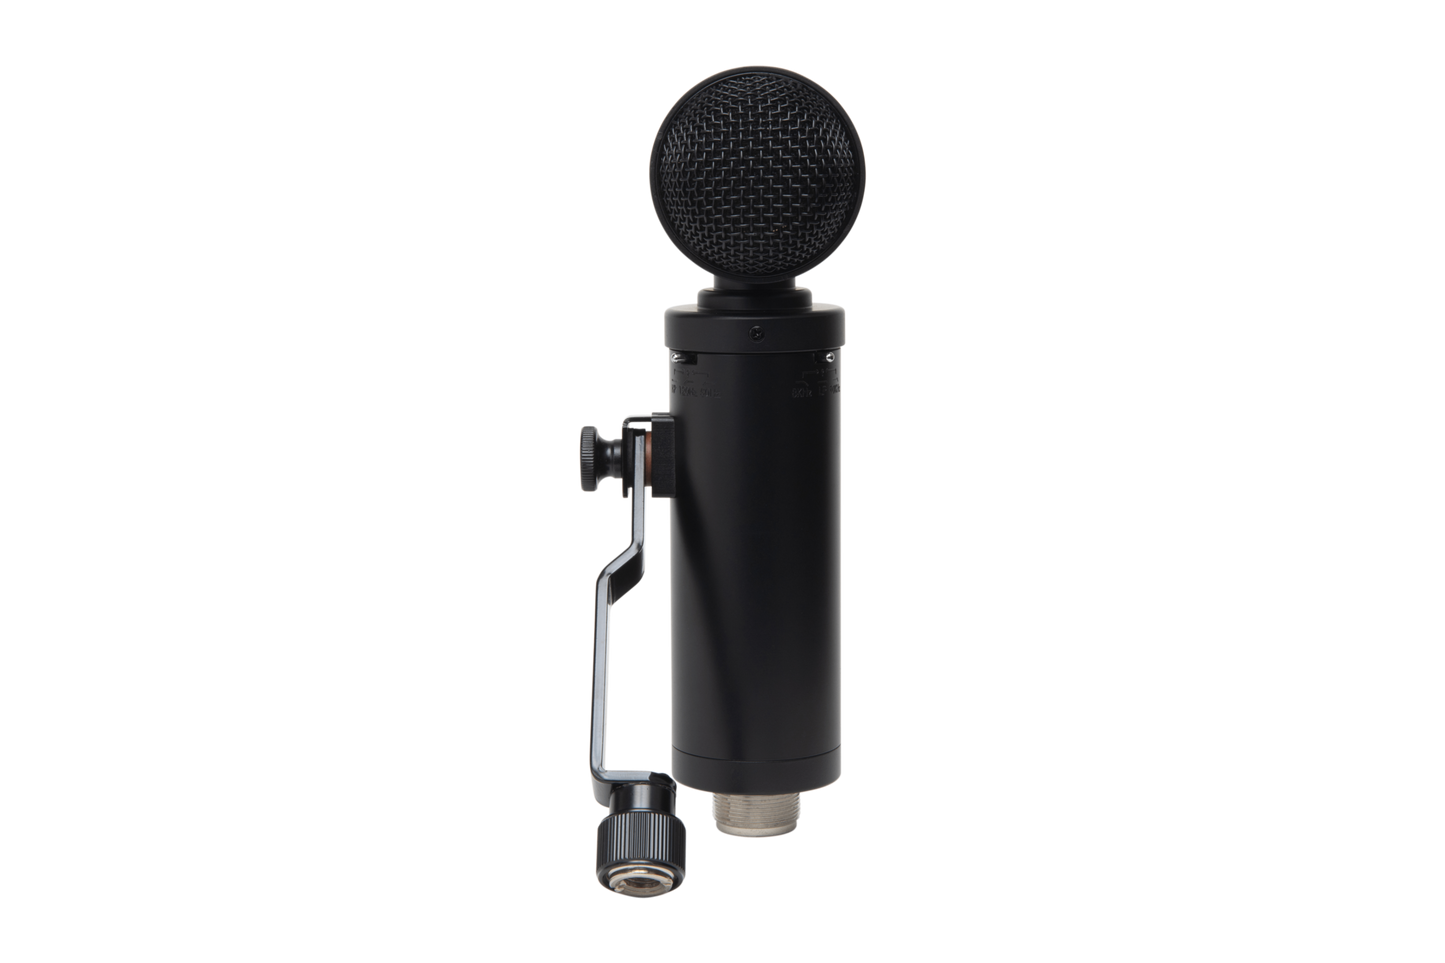 Lauten Audio LS-308 Large-diaphragm Side-address Condenser Microphone